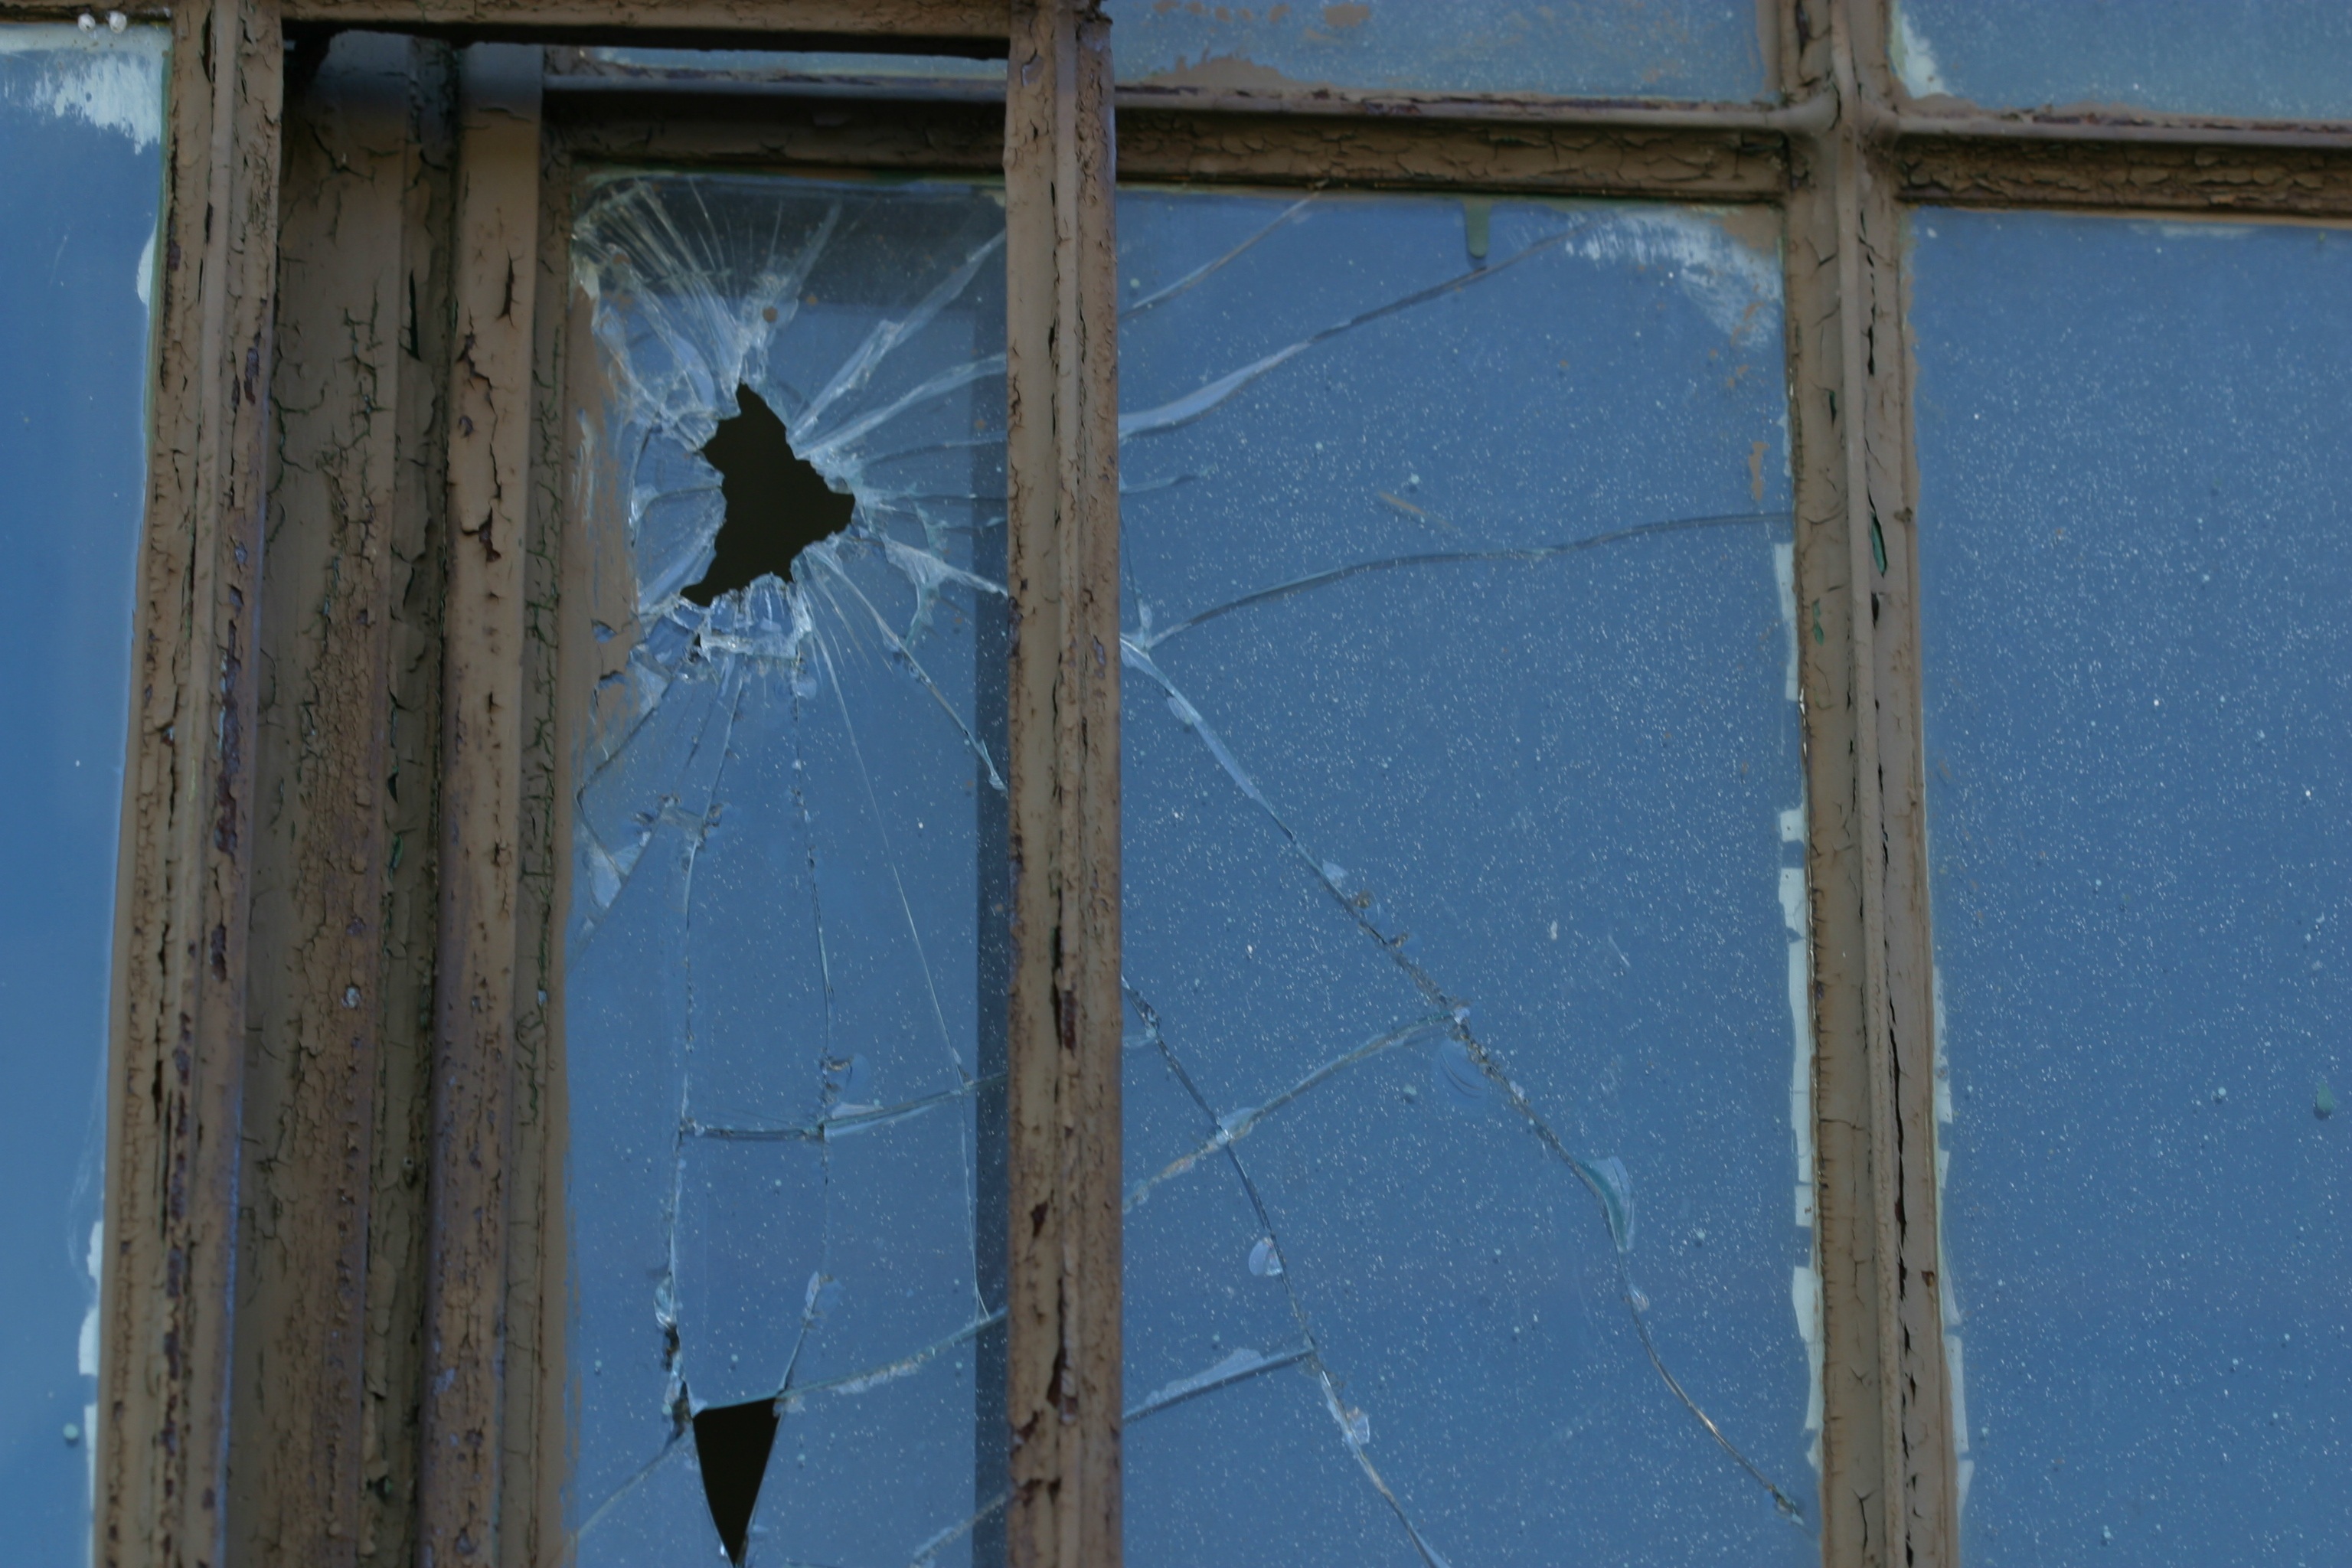 Разбить стекло дома